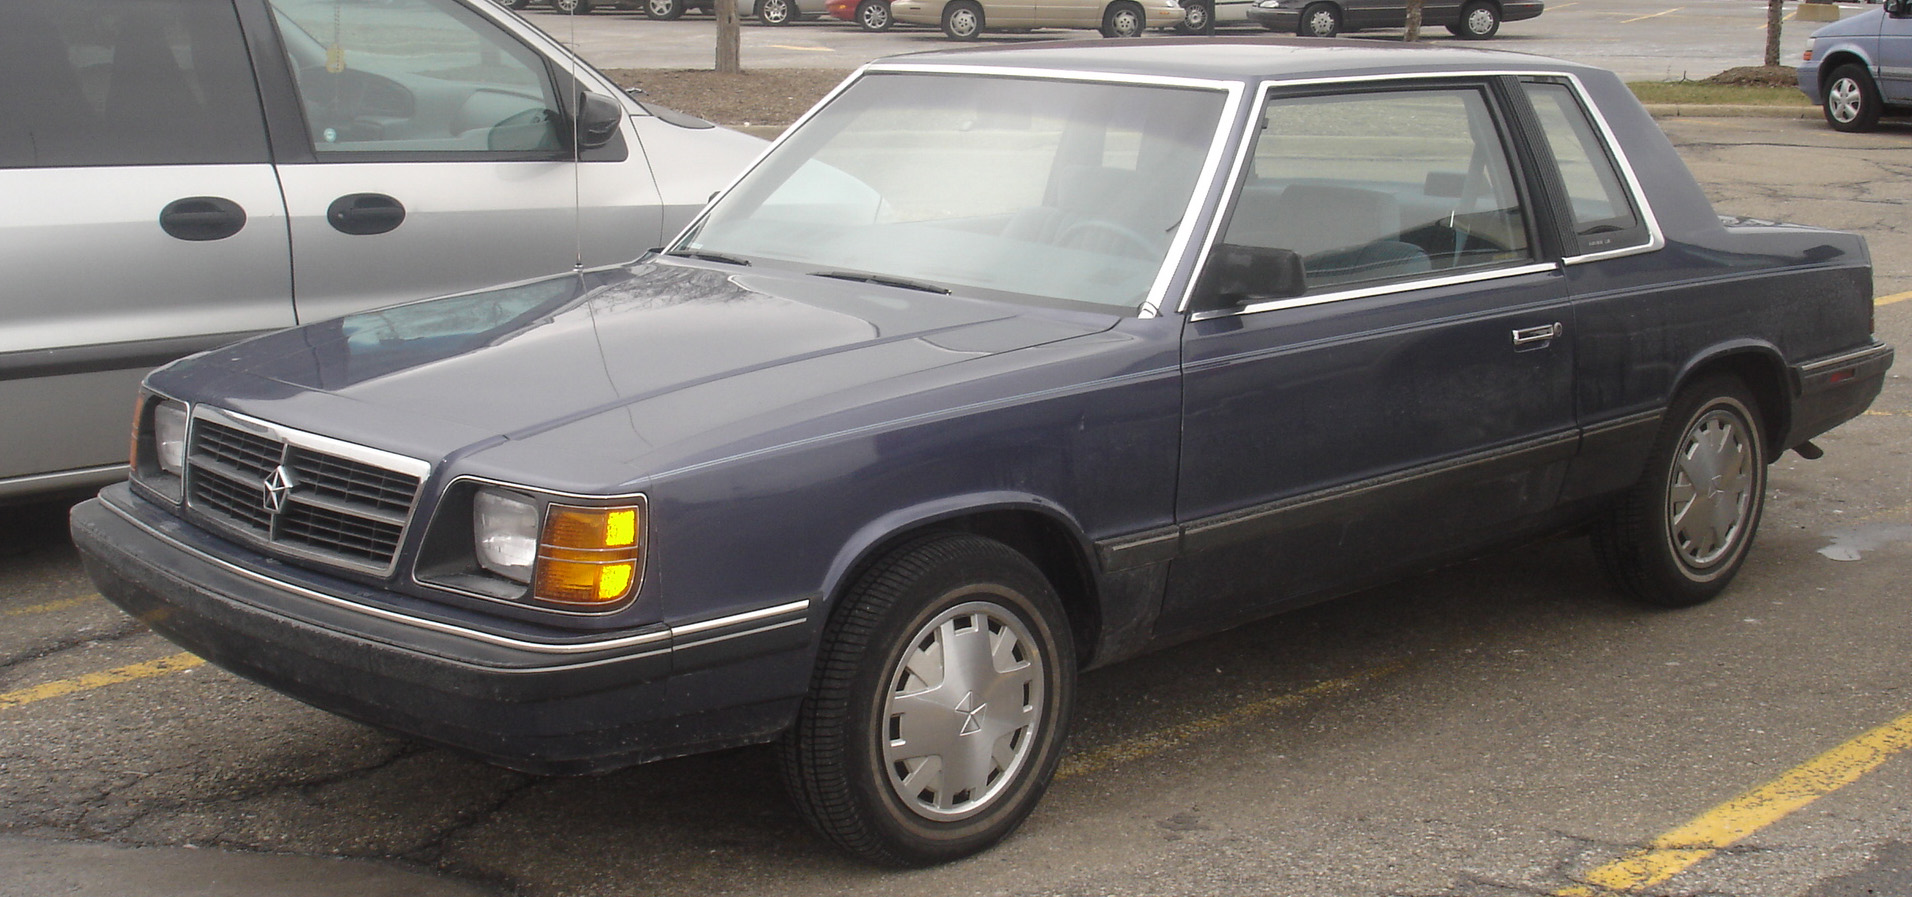 File:1989 Dodge Aries K coupe.jpg